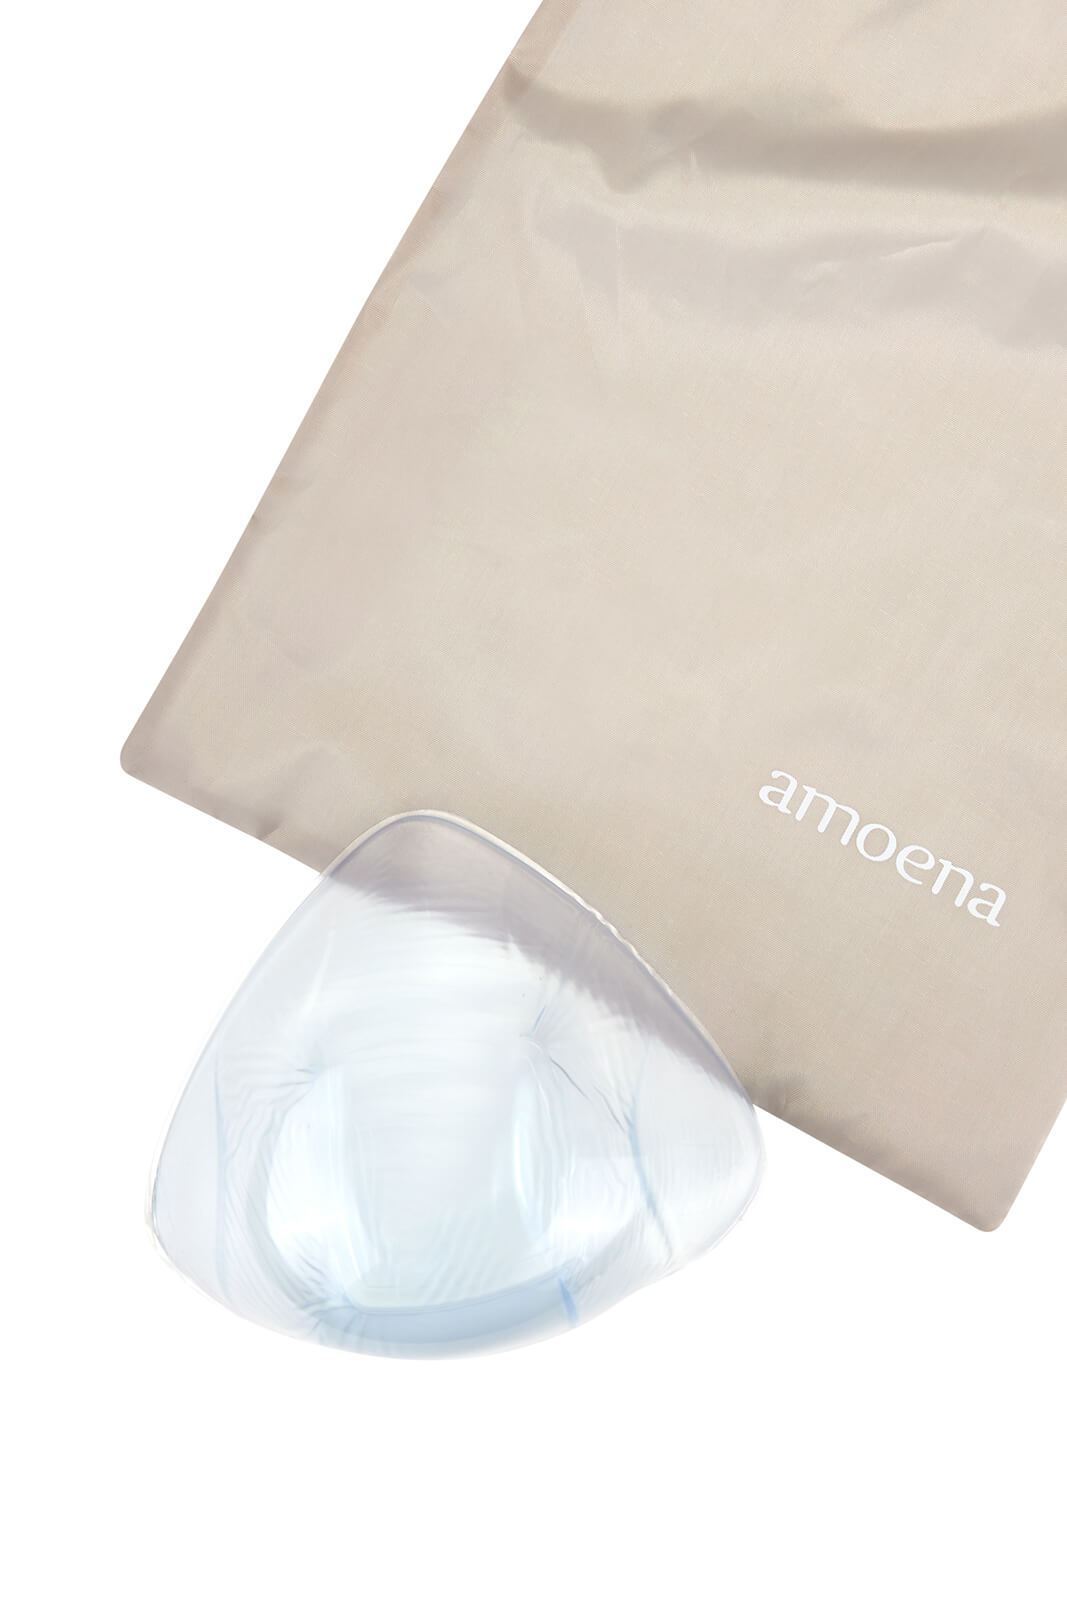 Aqua Wave swimform amoena ® para prótesis-traje de baño pechos de silicona